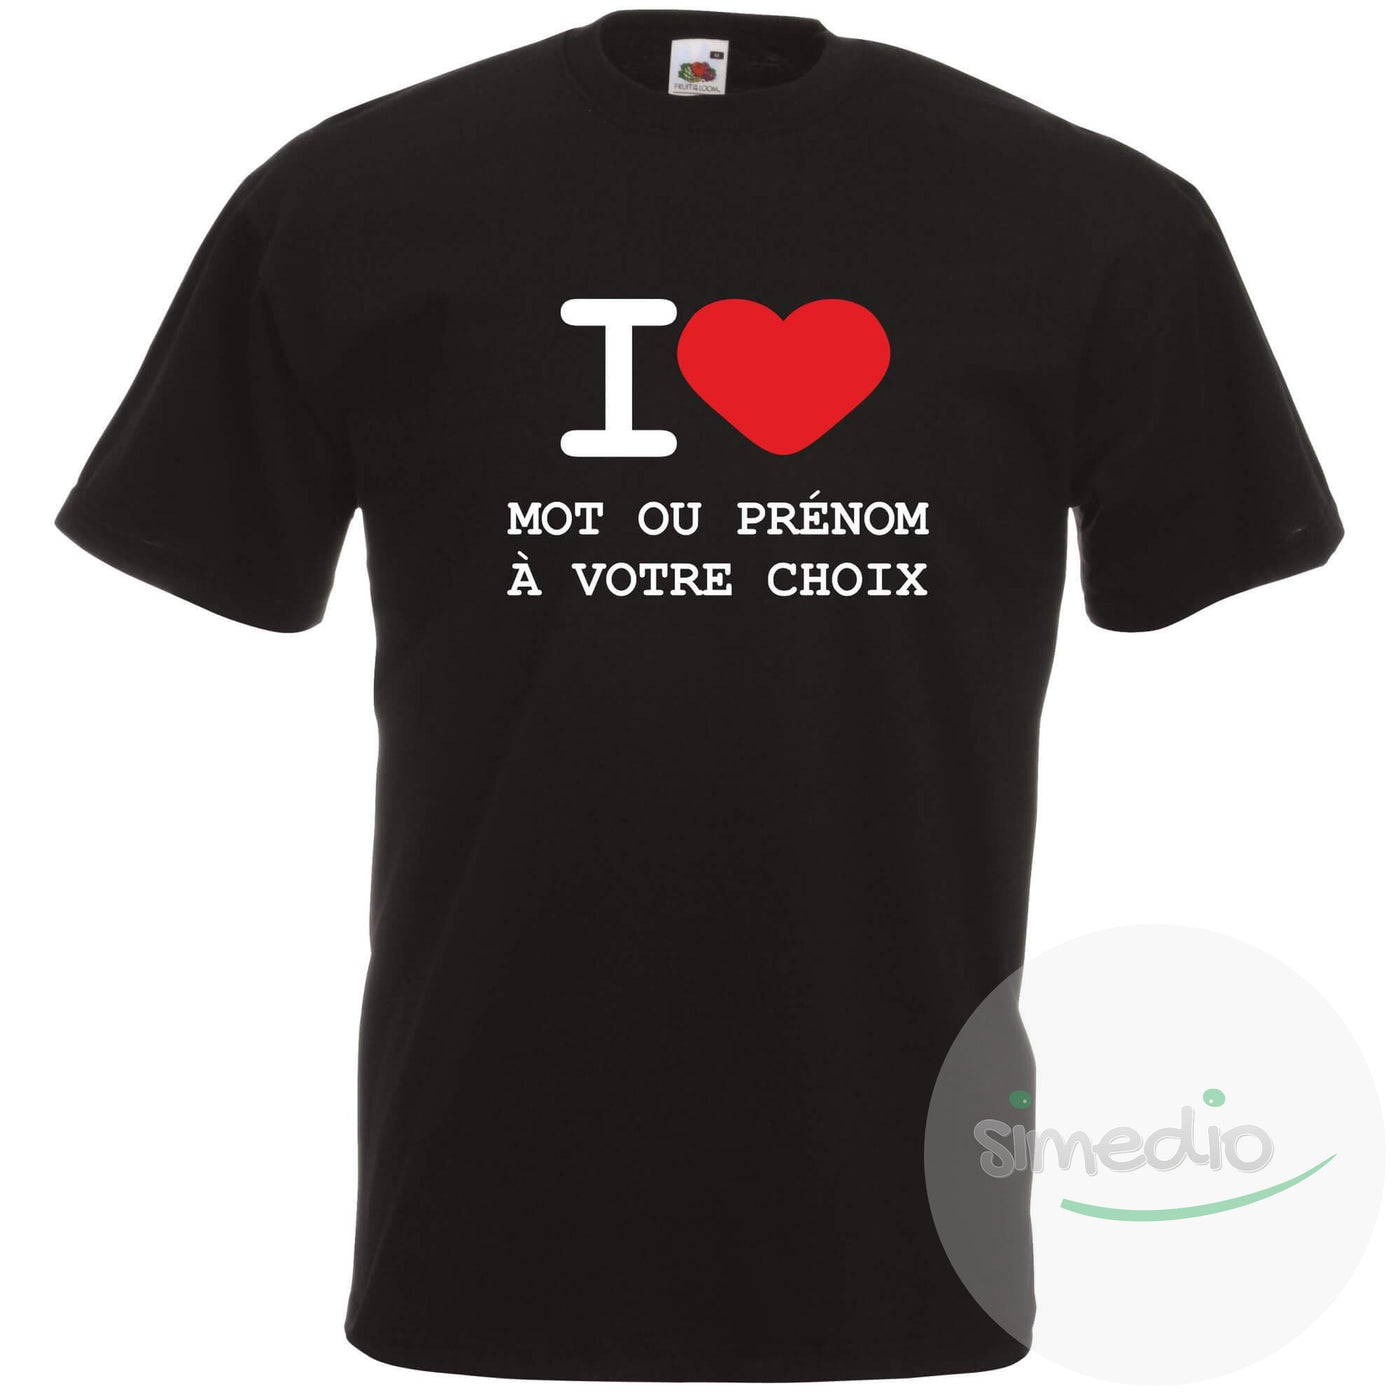 T-shirt original : I LOVE + prénom ou mot à votre choix à imprimer, Noir, S, Homme - SiMEDIO